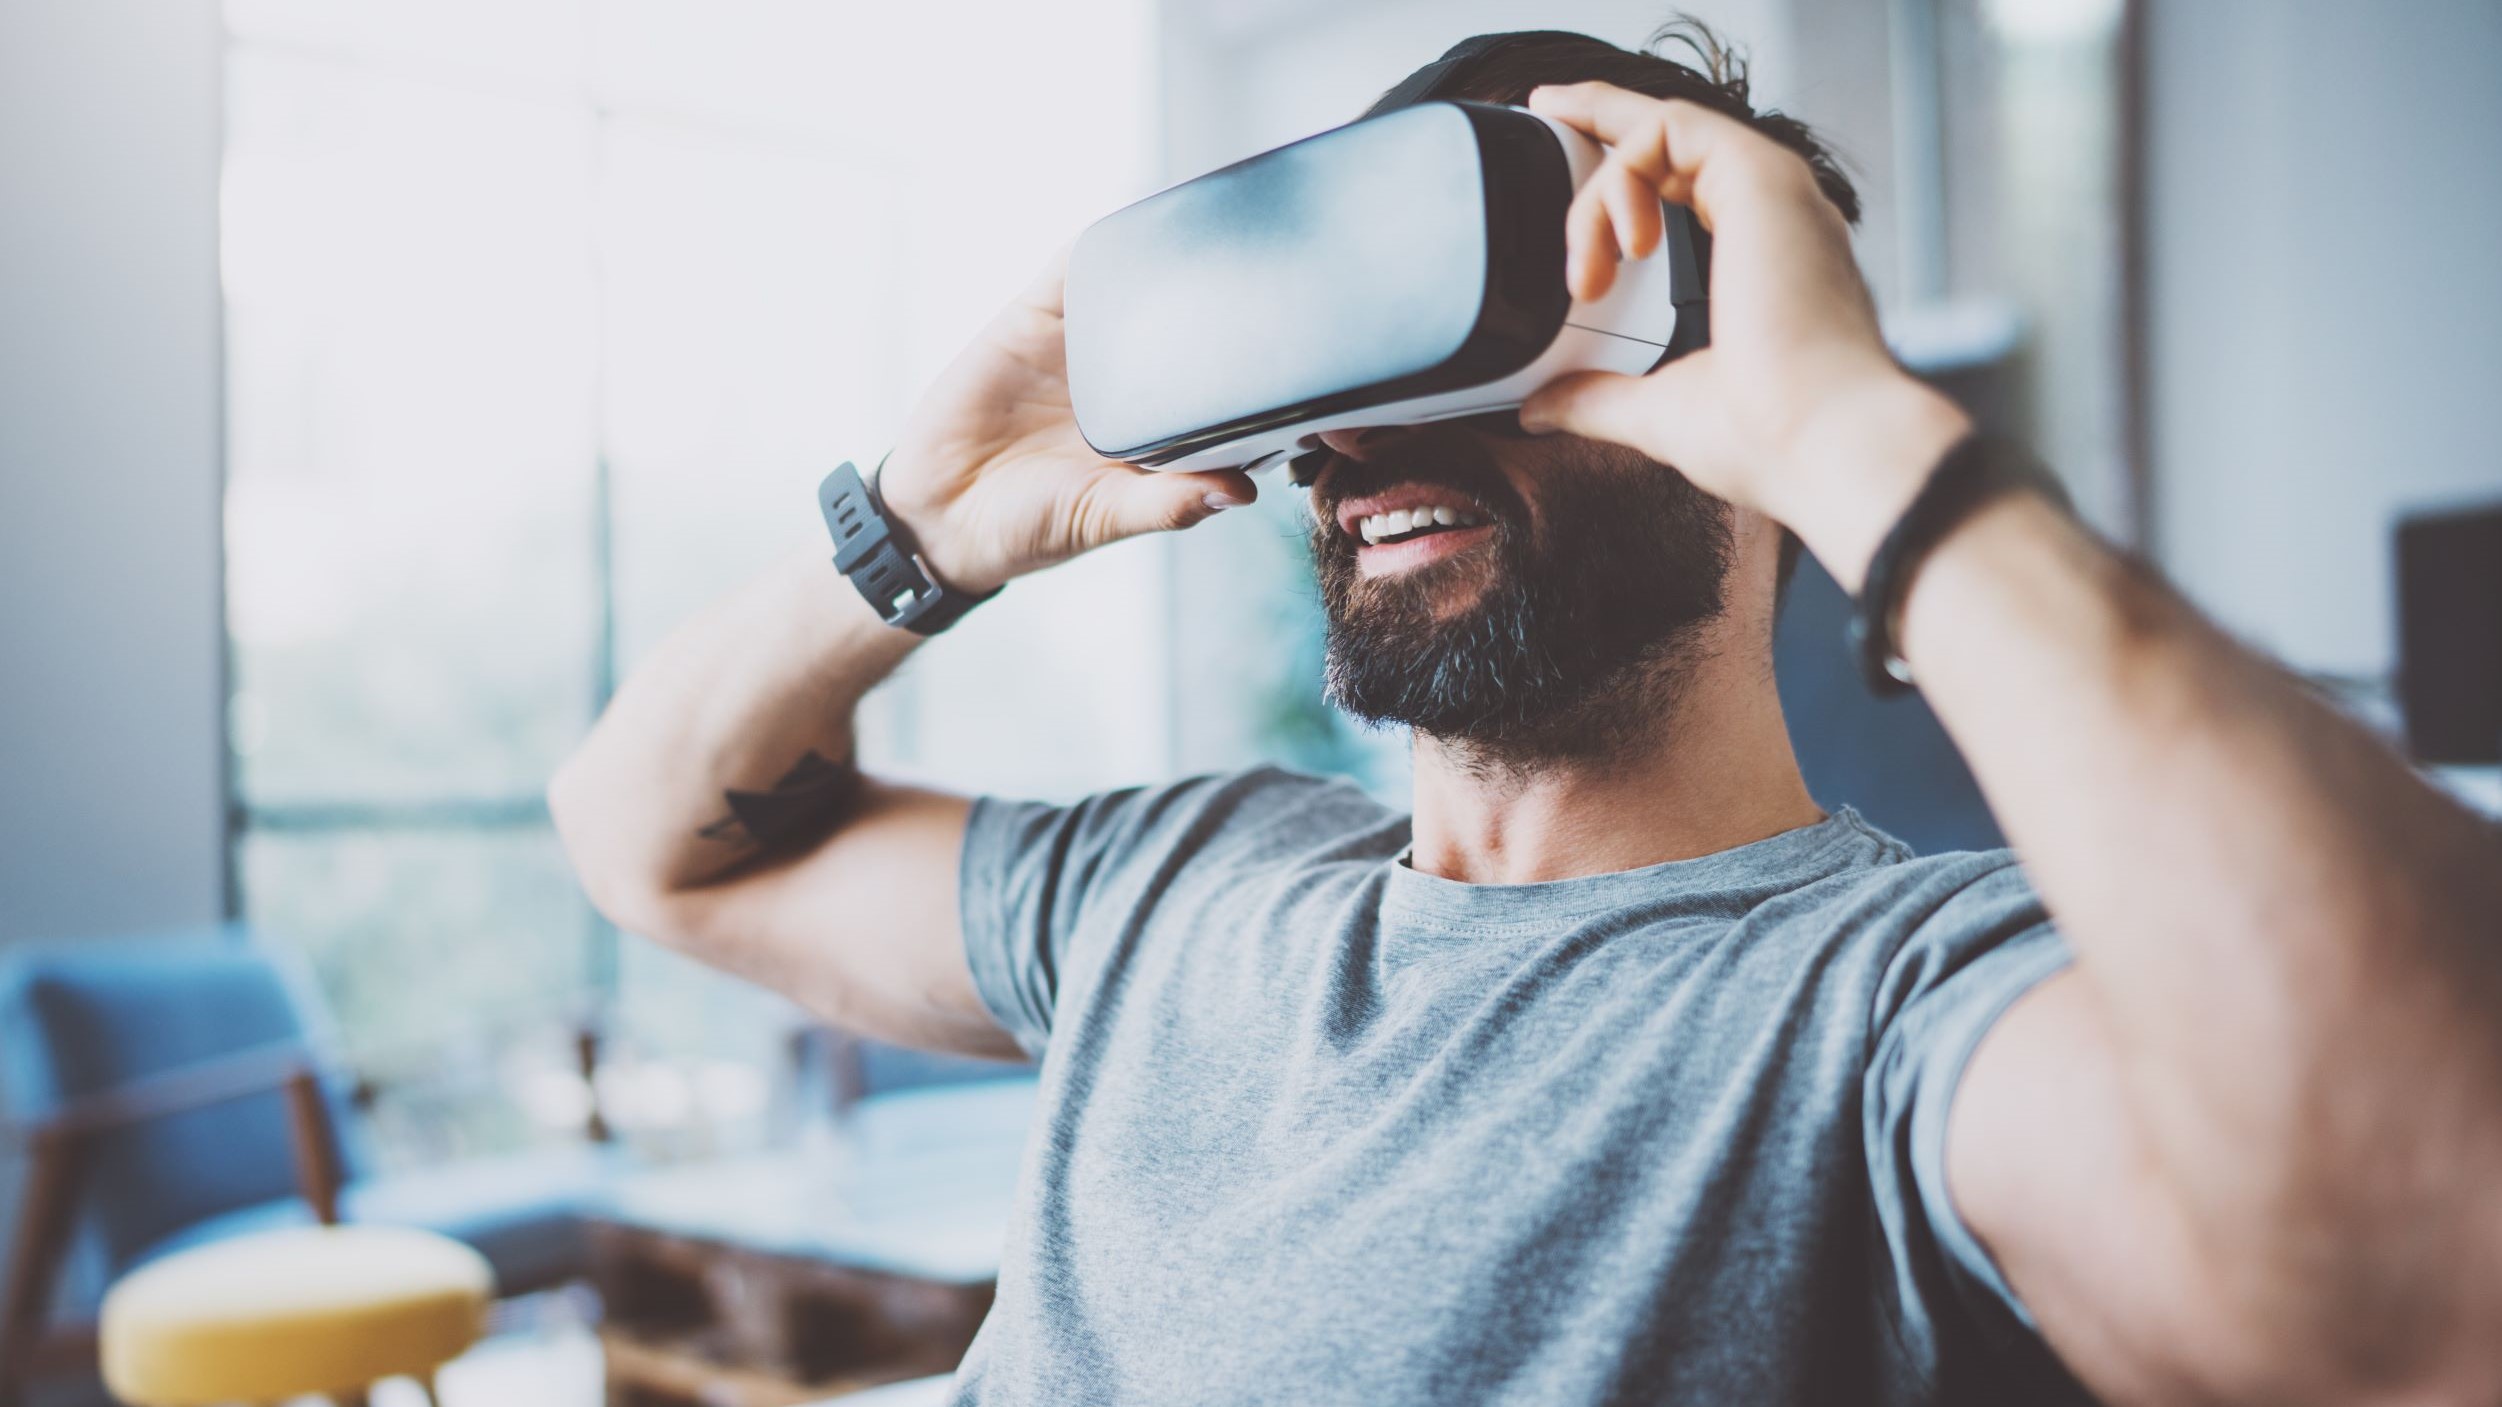 Is social virtual reality the next big thing?